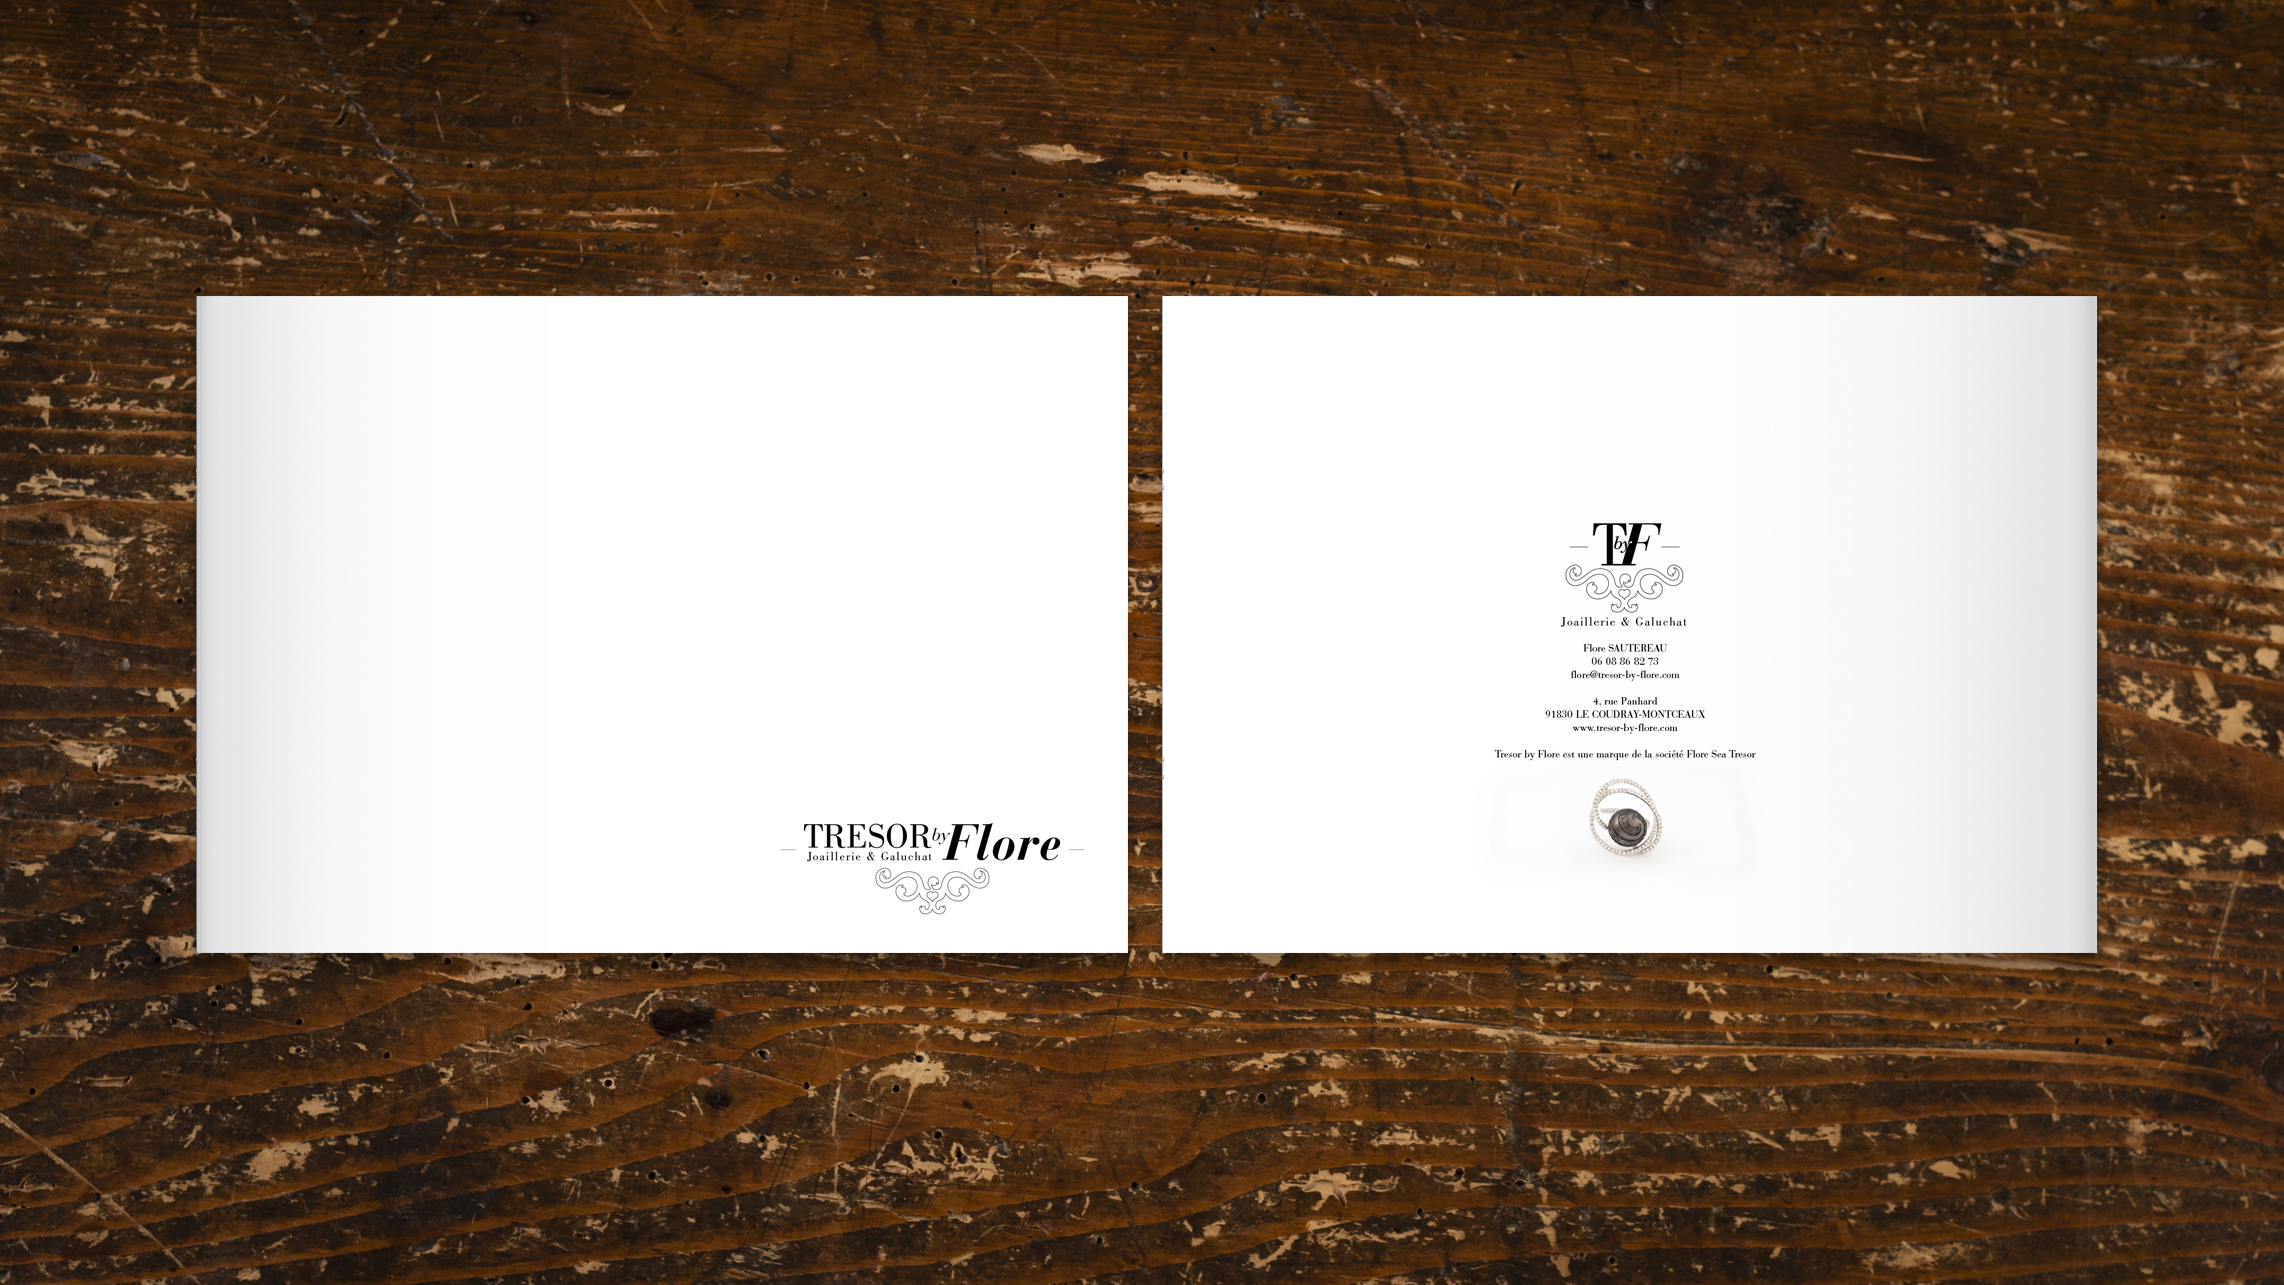 Tresor by Flore catalogue